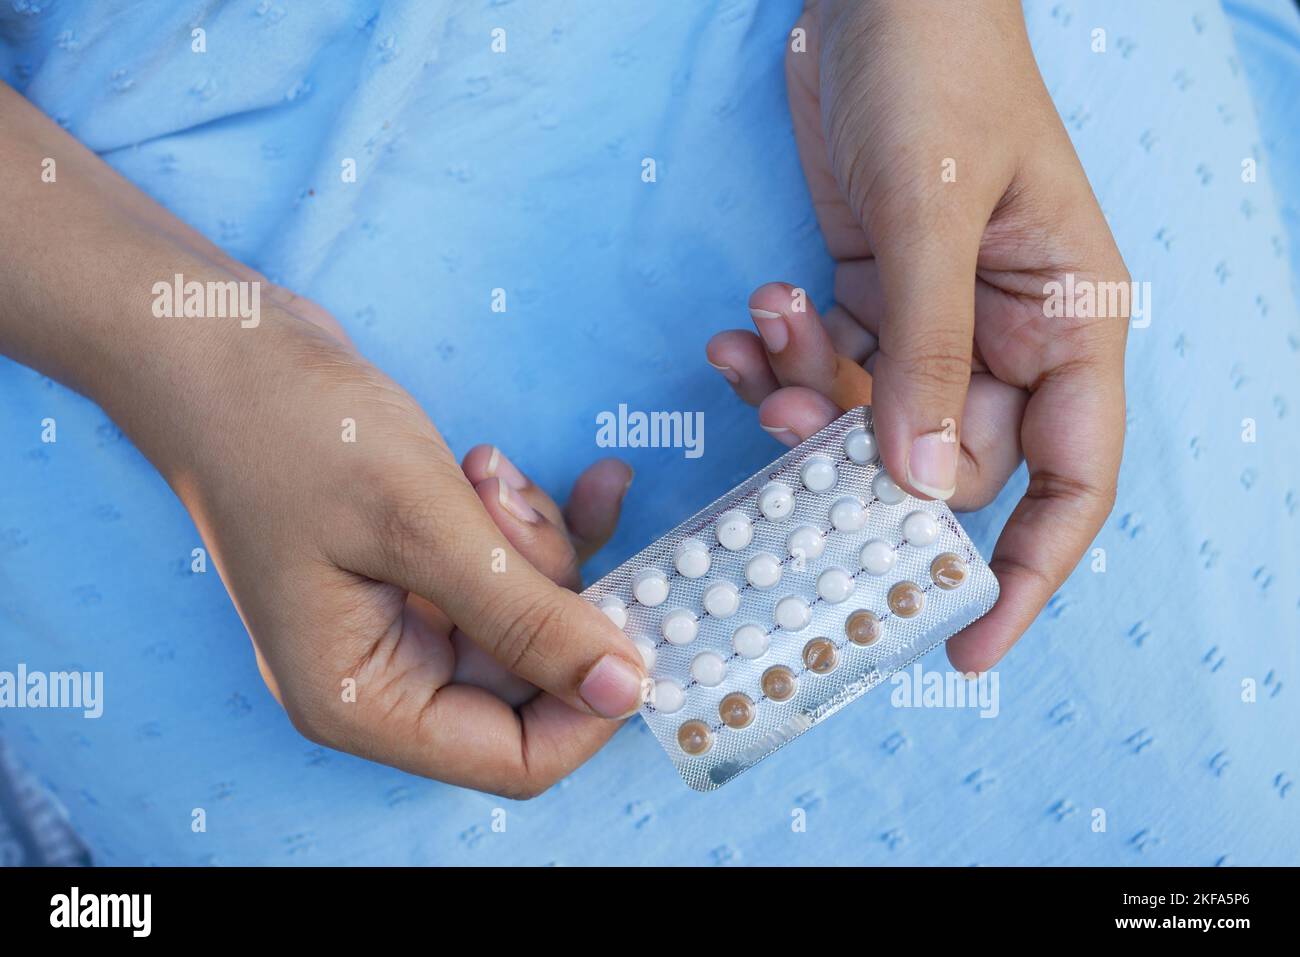 women hand holding birth control pills close up  Stock Photo